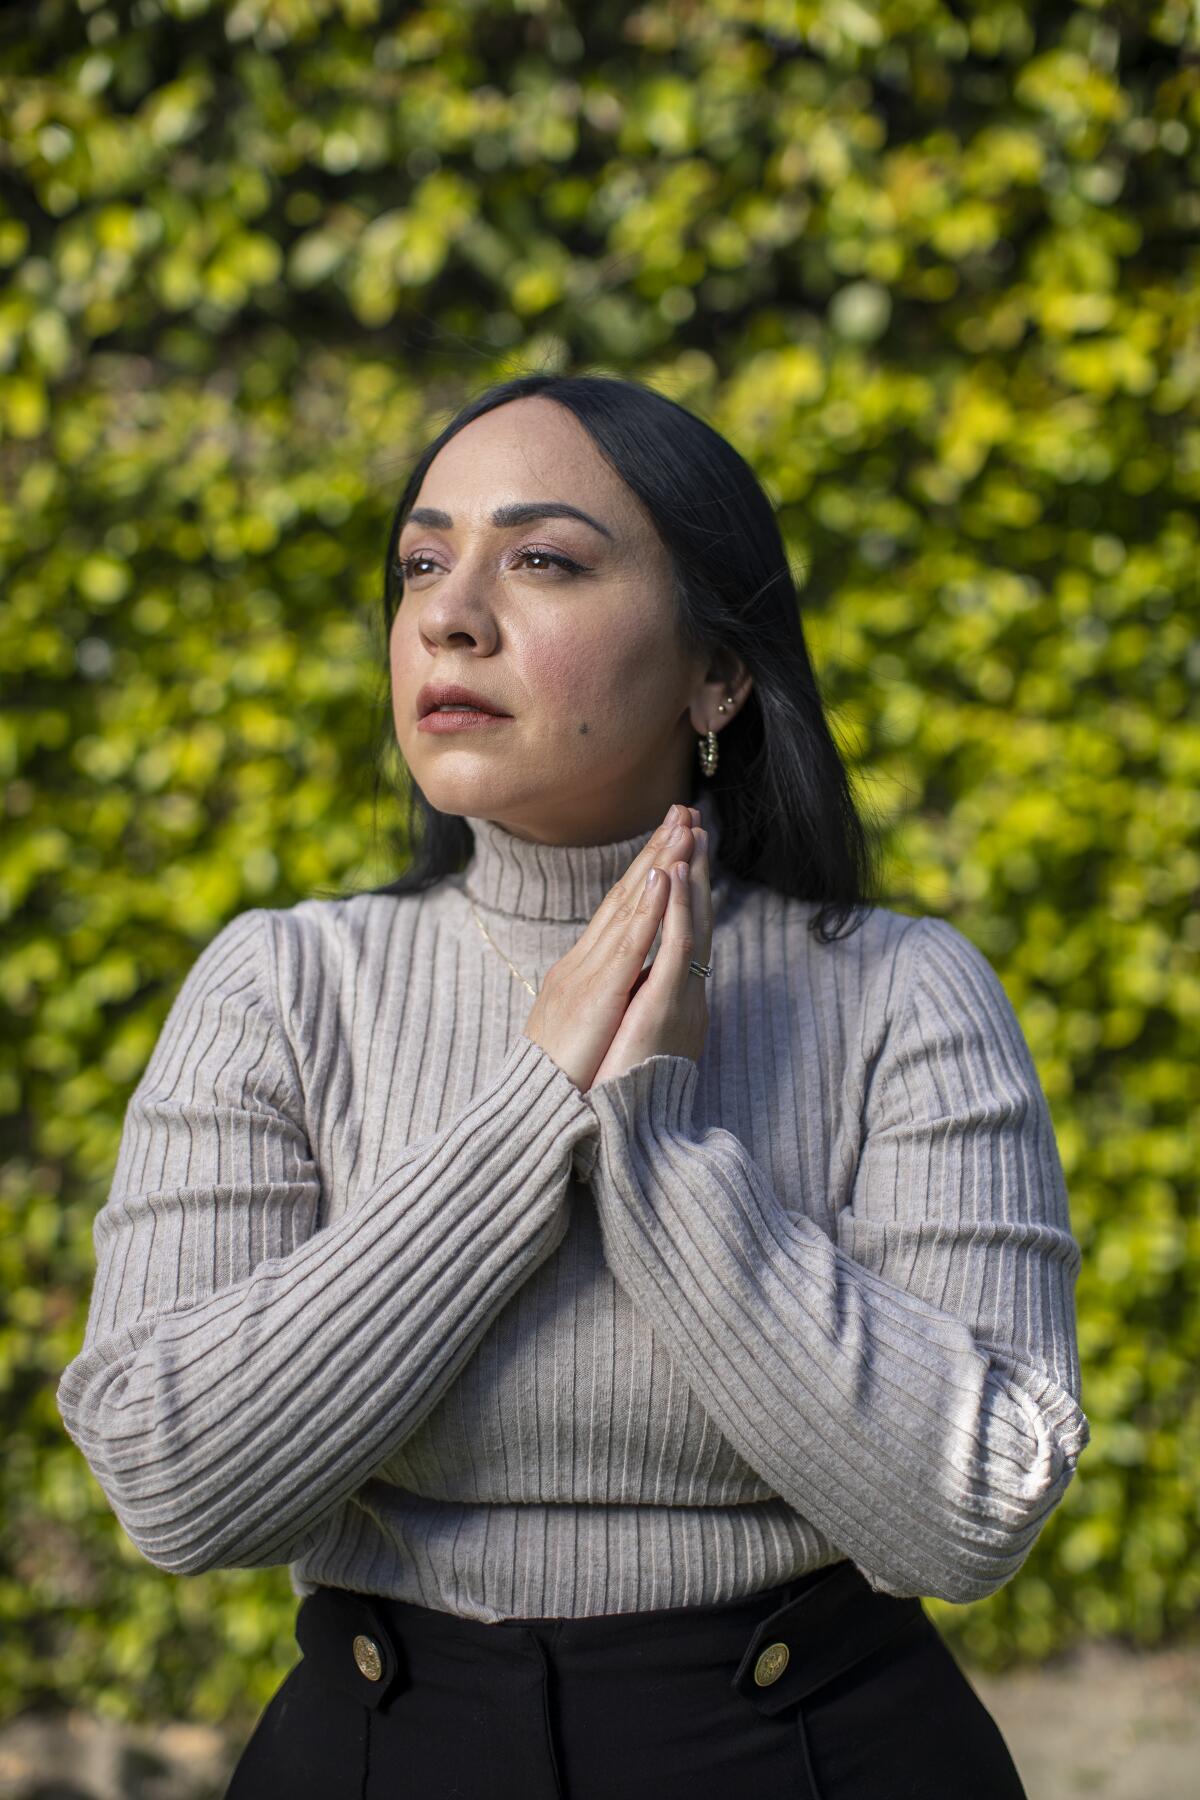 Altadena, CA - March 15: Mexican indie-pop singer and composer Carla Morrison 